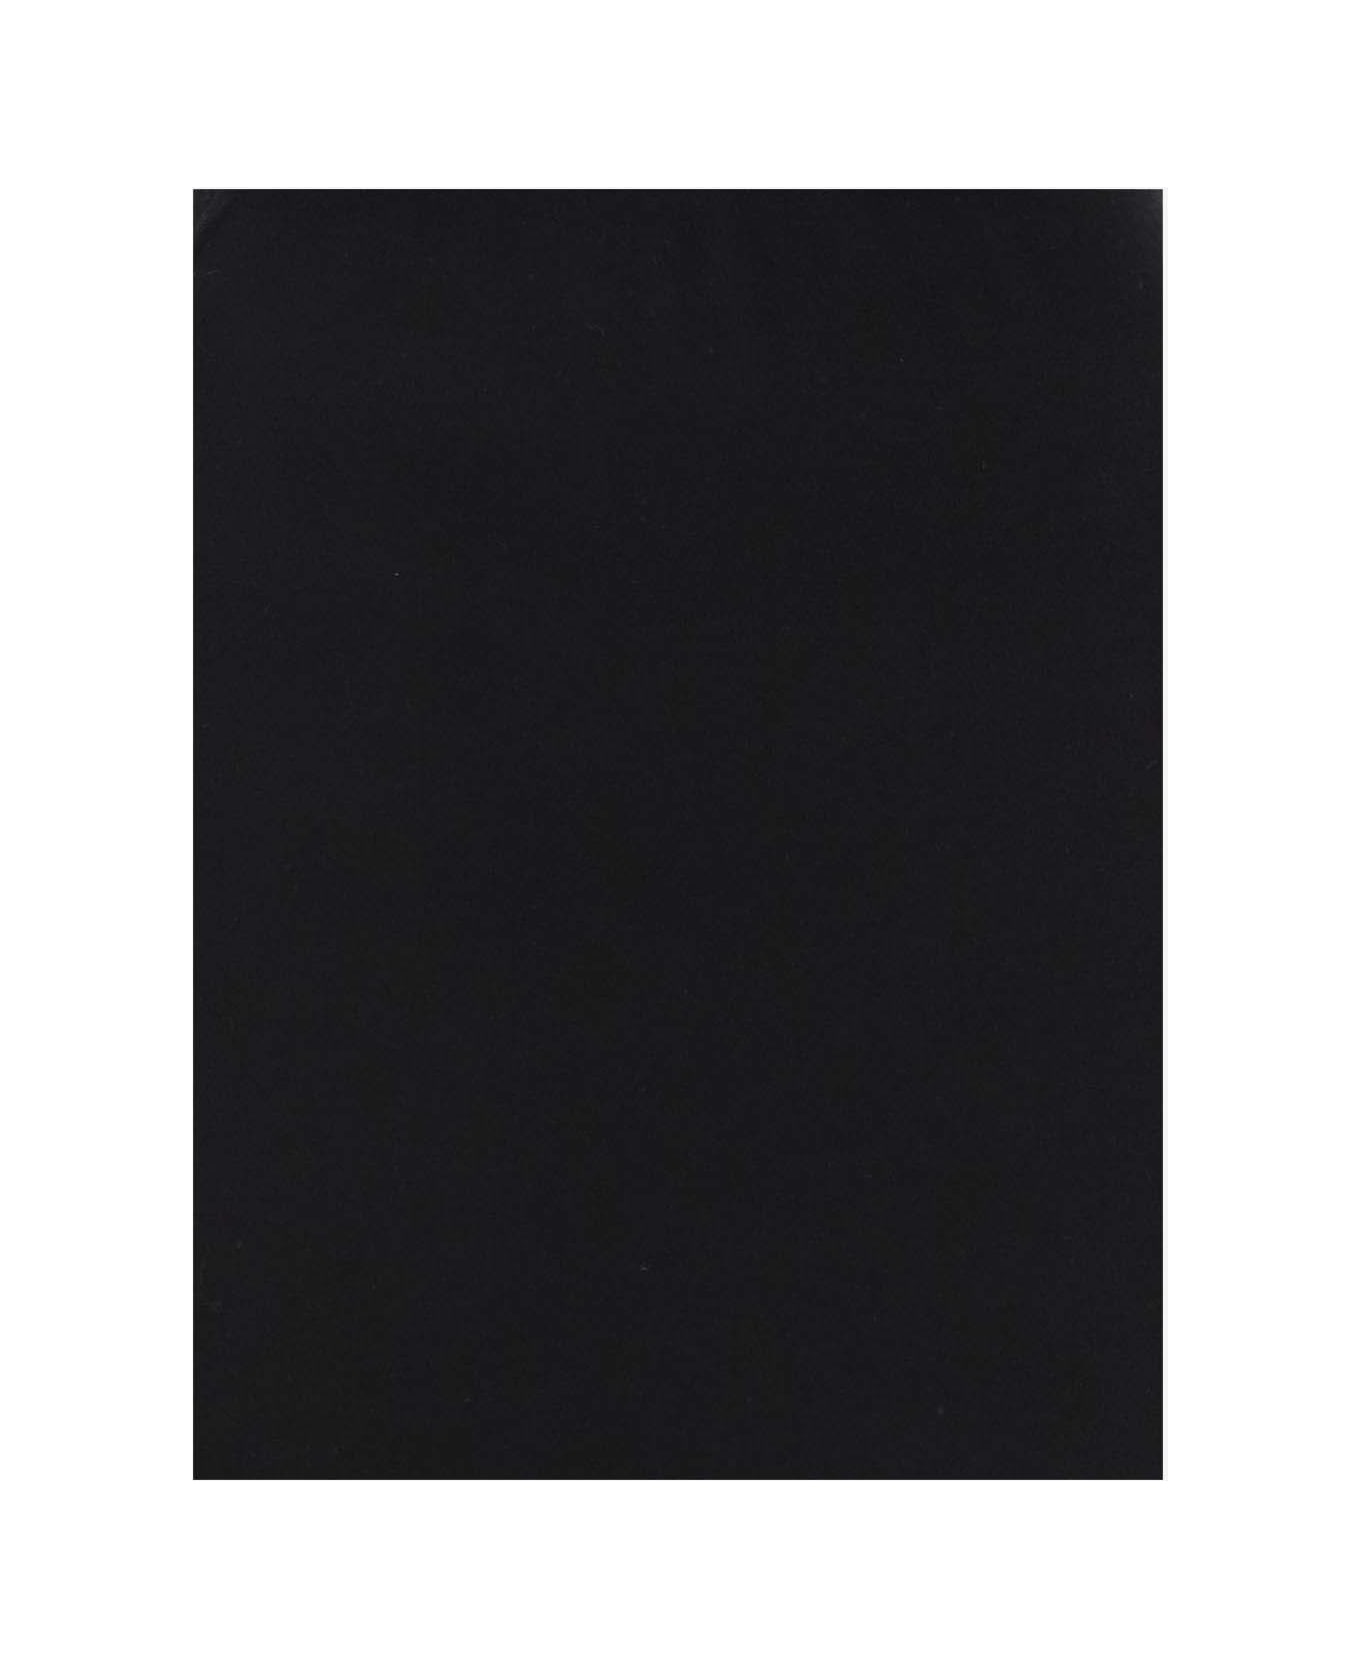 Saint Laurent Wool Pencil Skirt - Black